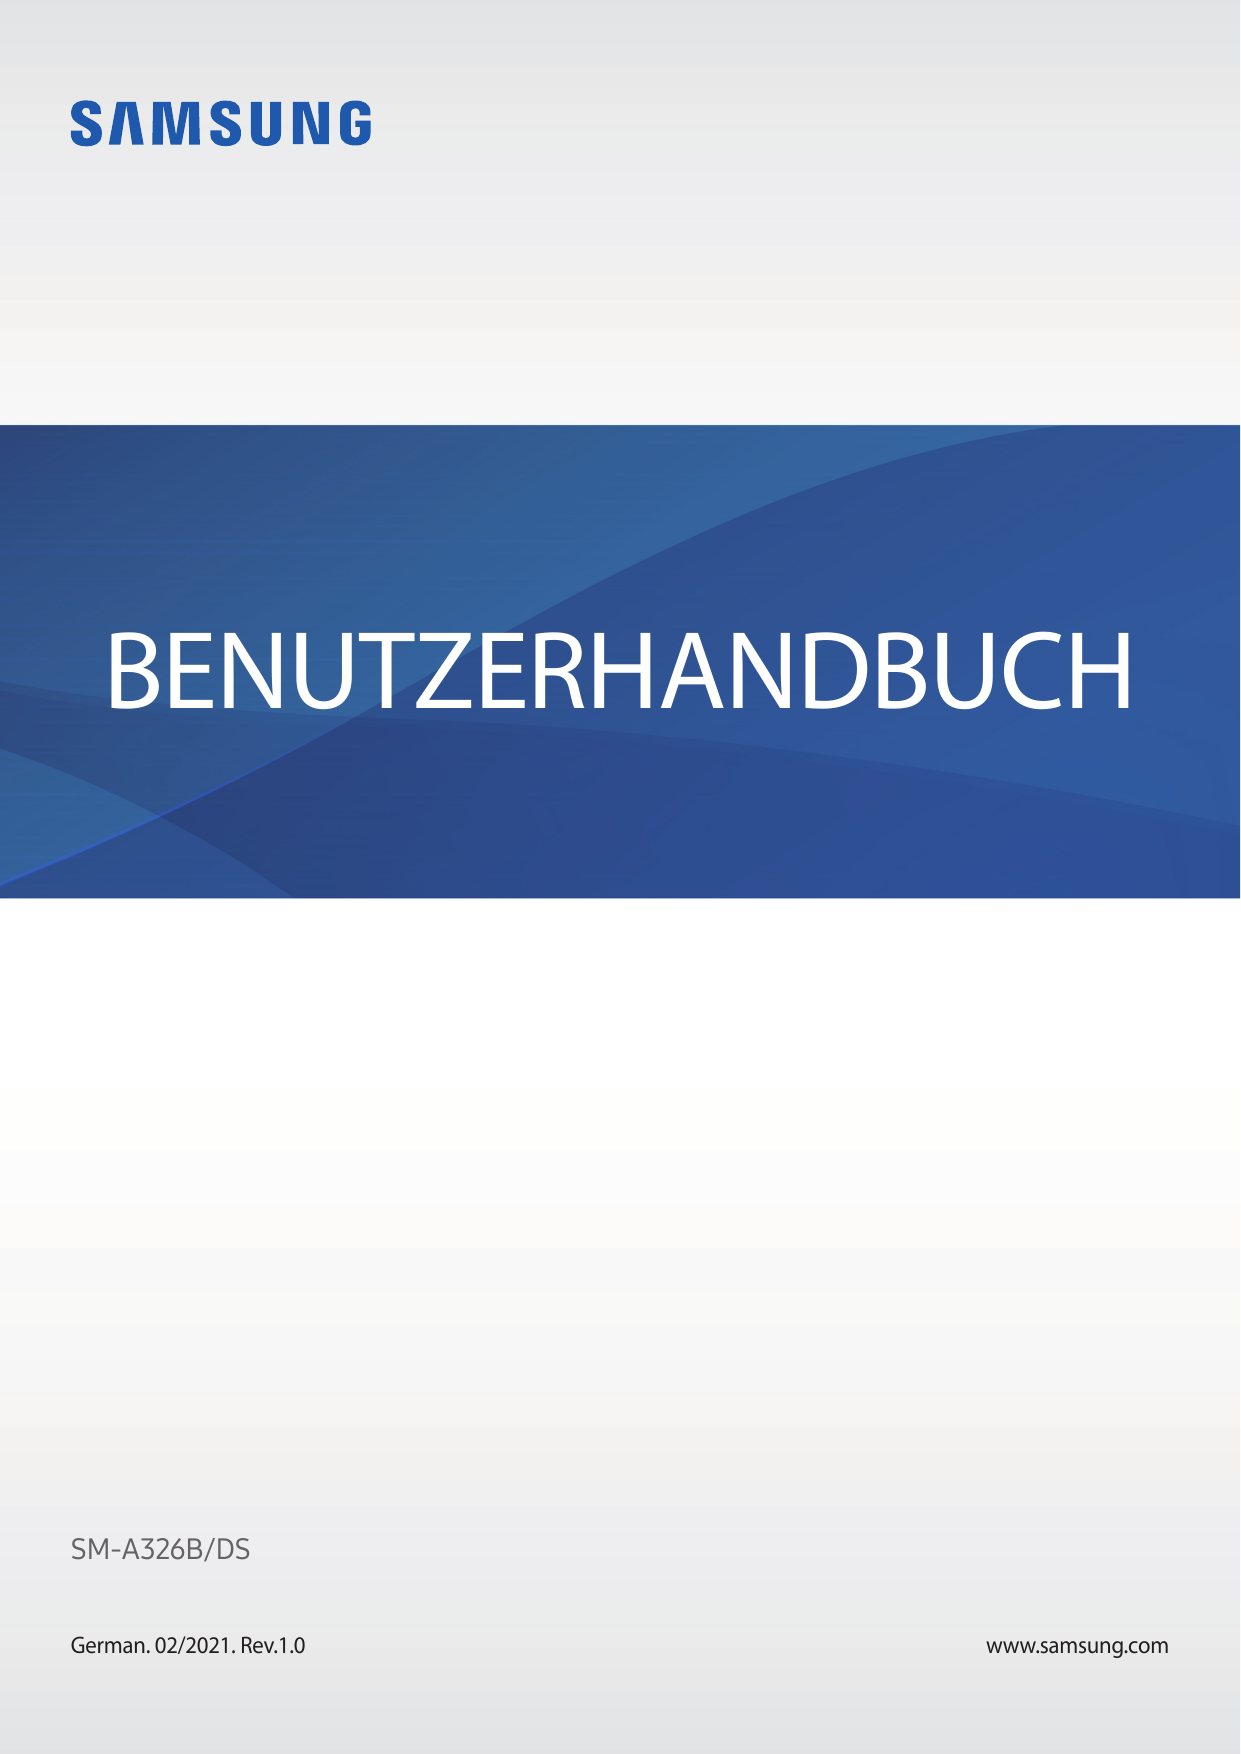 BENUTZERHANDBUCHSM-A326B/DSGerman. 02/2021. Rev.1.0www.samsung.com